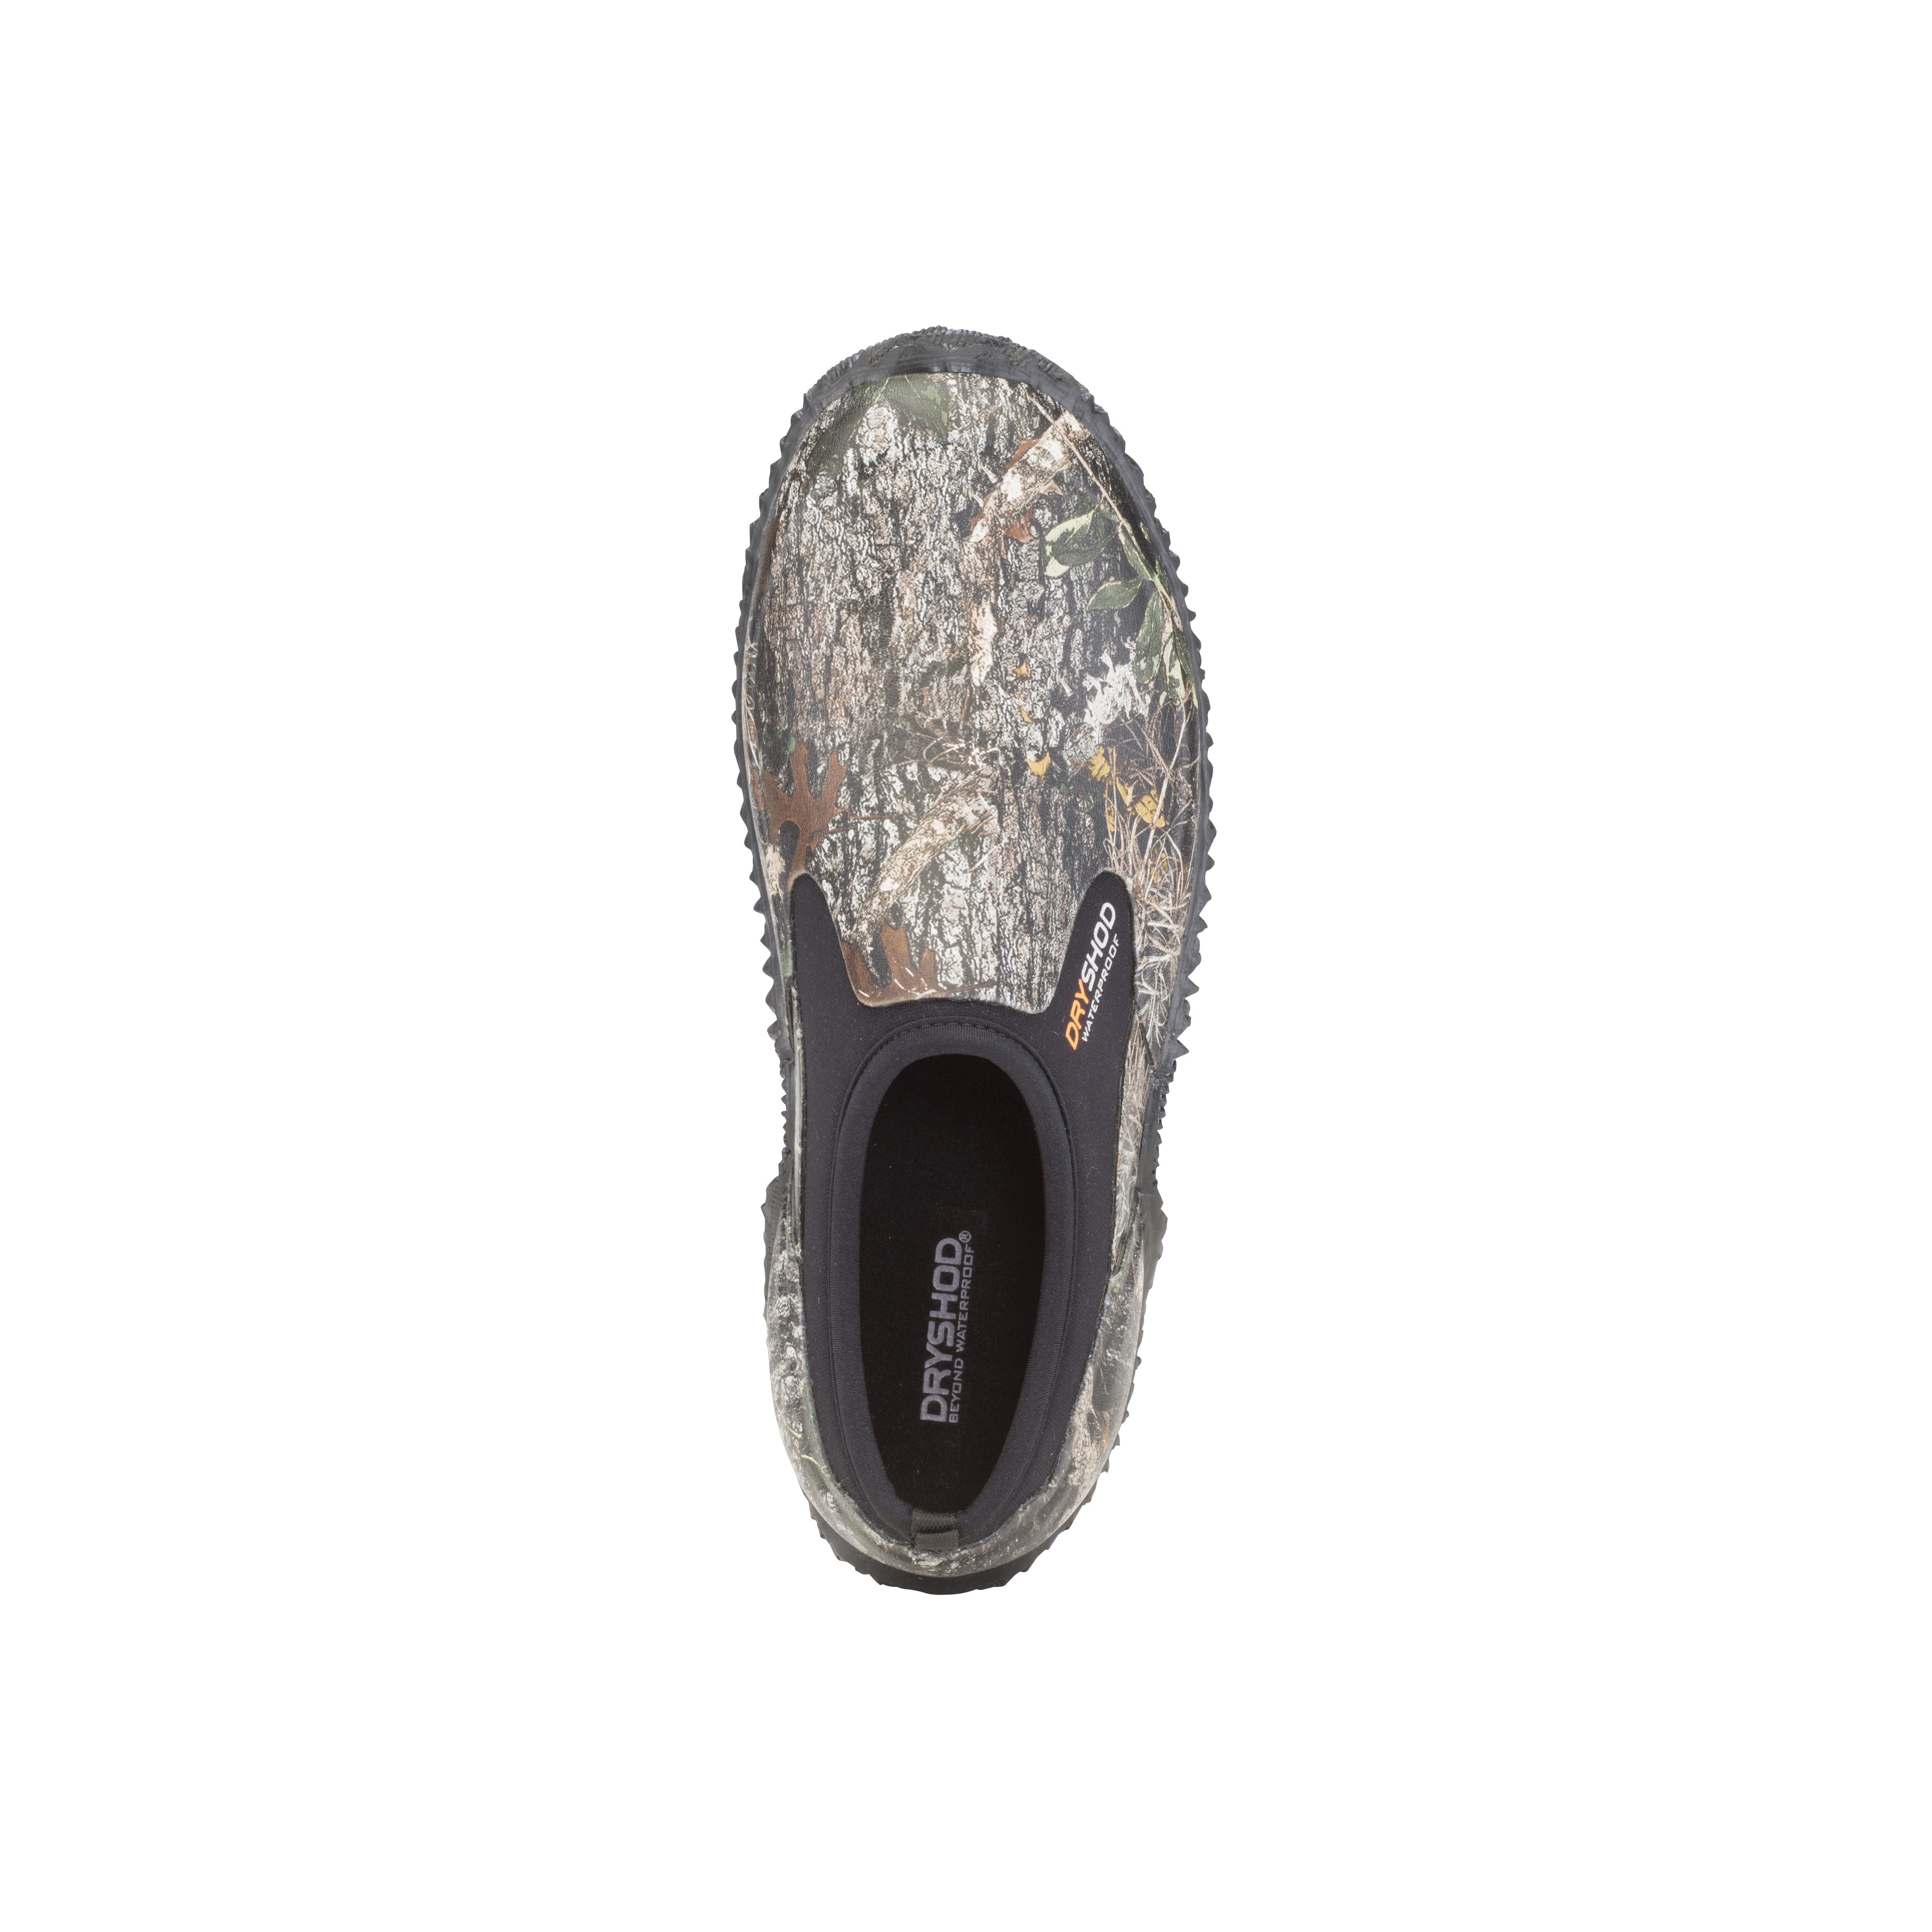 Legend Camp Shoe Camo – Dryshod Waterproof Boots